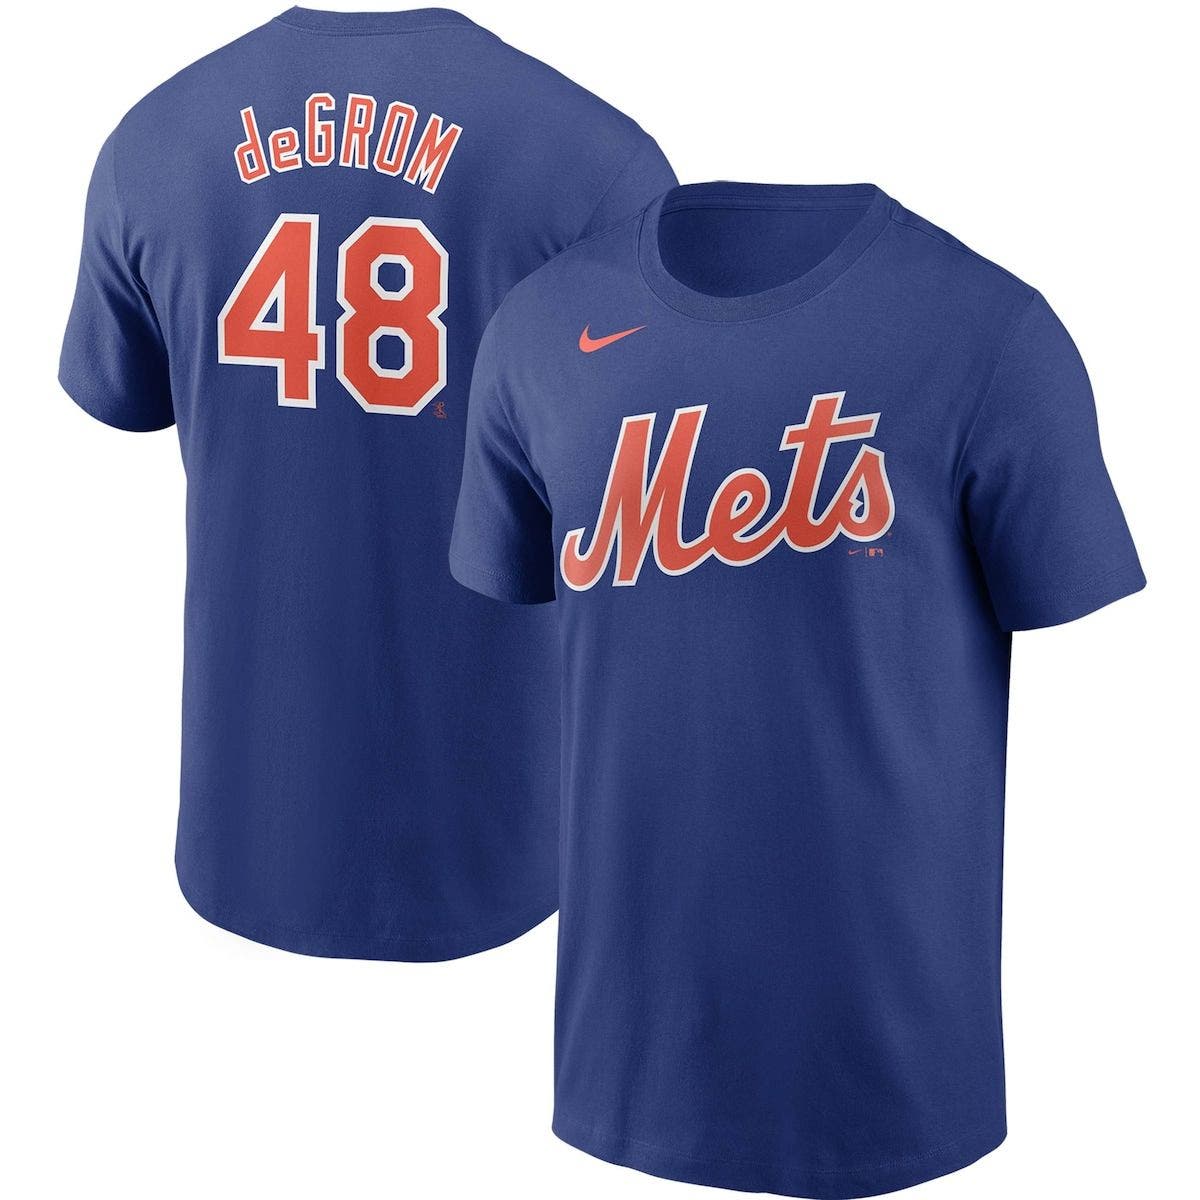 New York Mets Jacob deGrom Shirt Mets Shirt